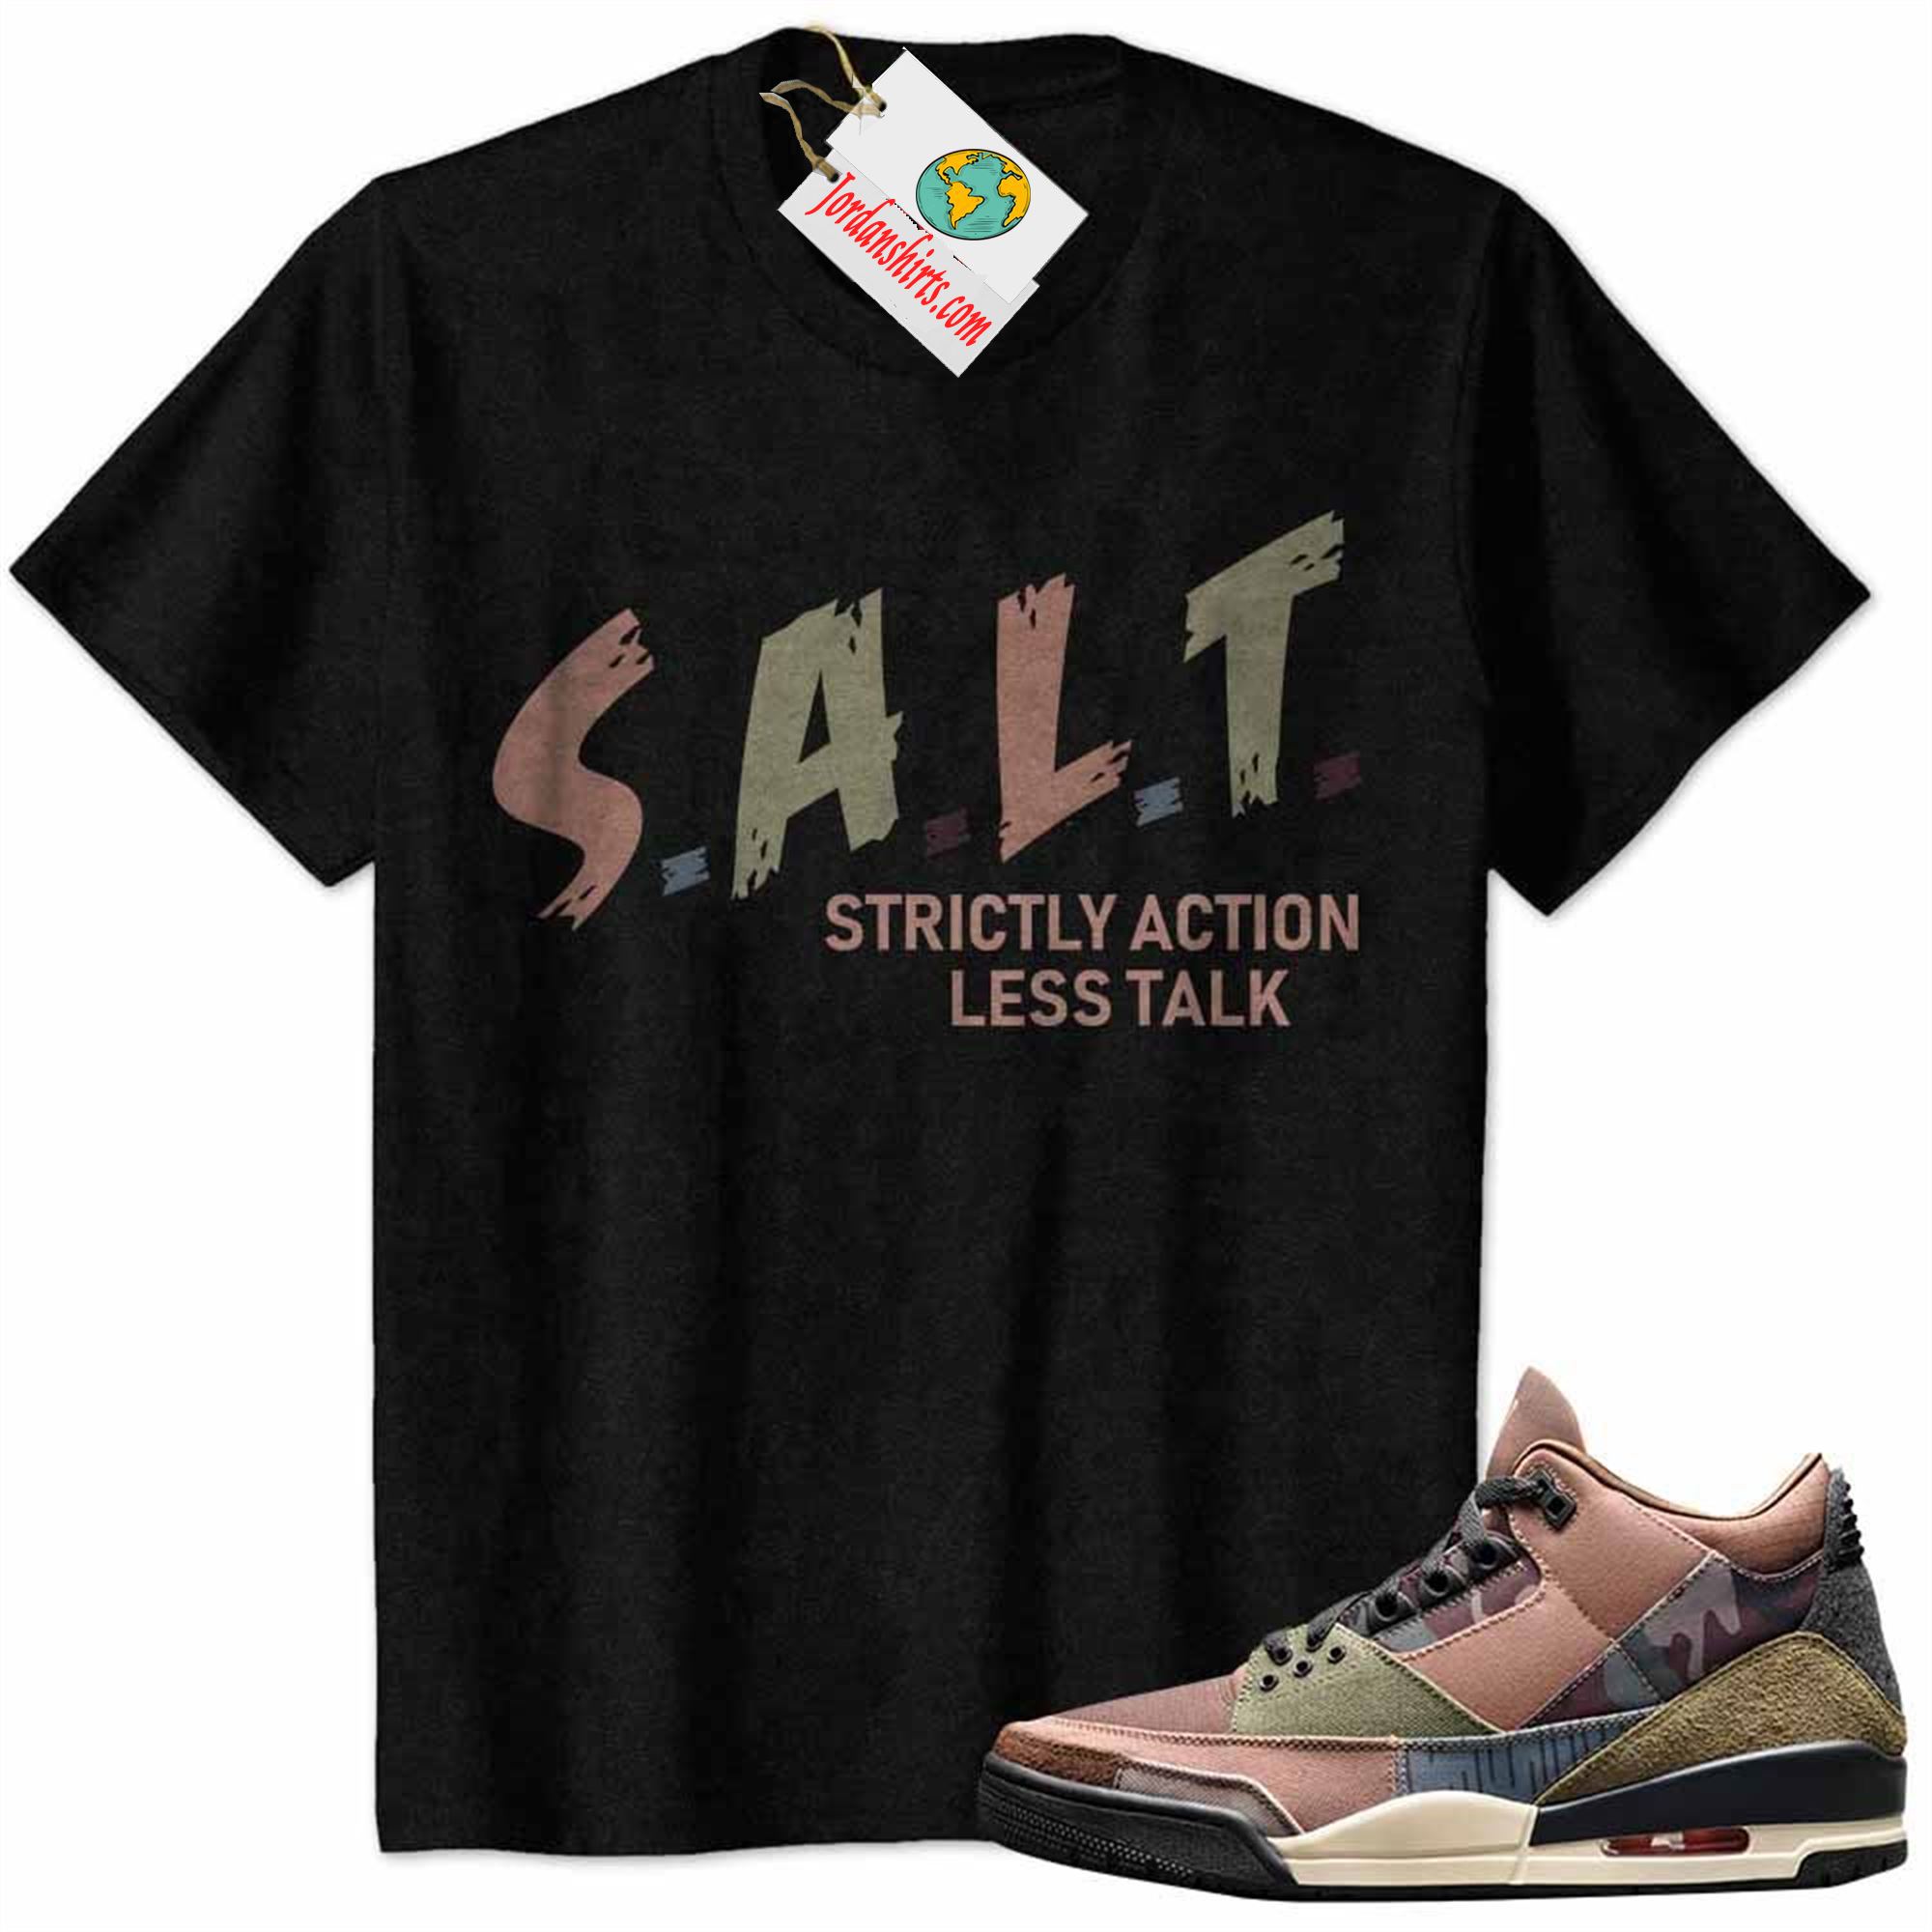 Jordan 3 Shirt, Salt Salt Strictly Action Less Talk Black Air Jordan 3 Patchwork 3s Full Size Up To 5xl